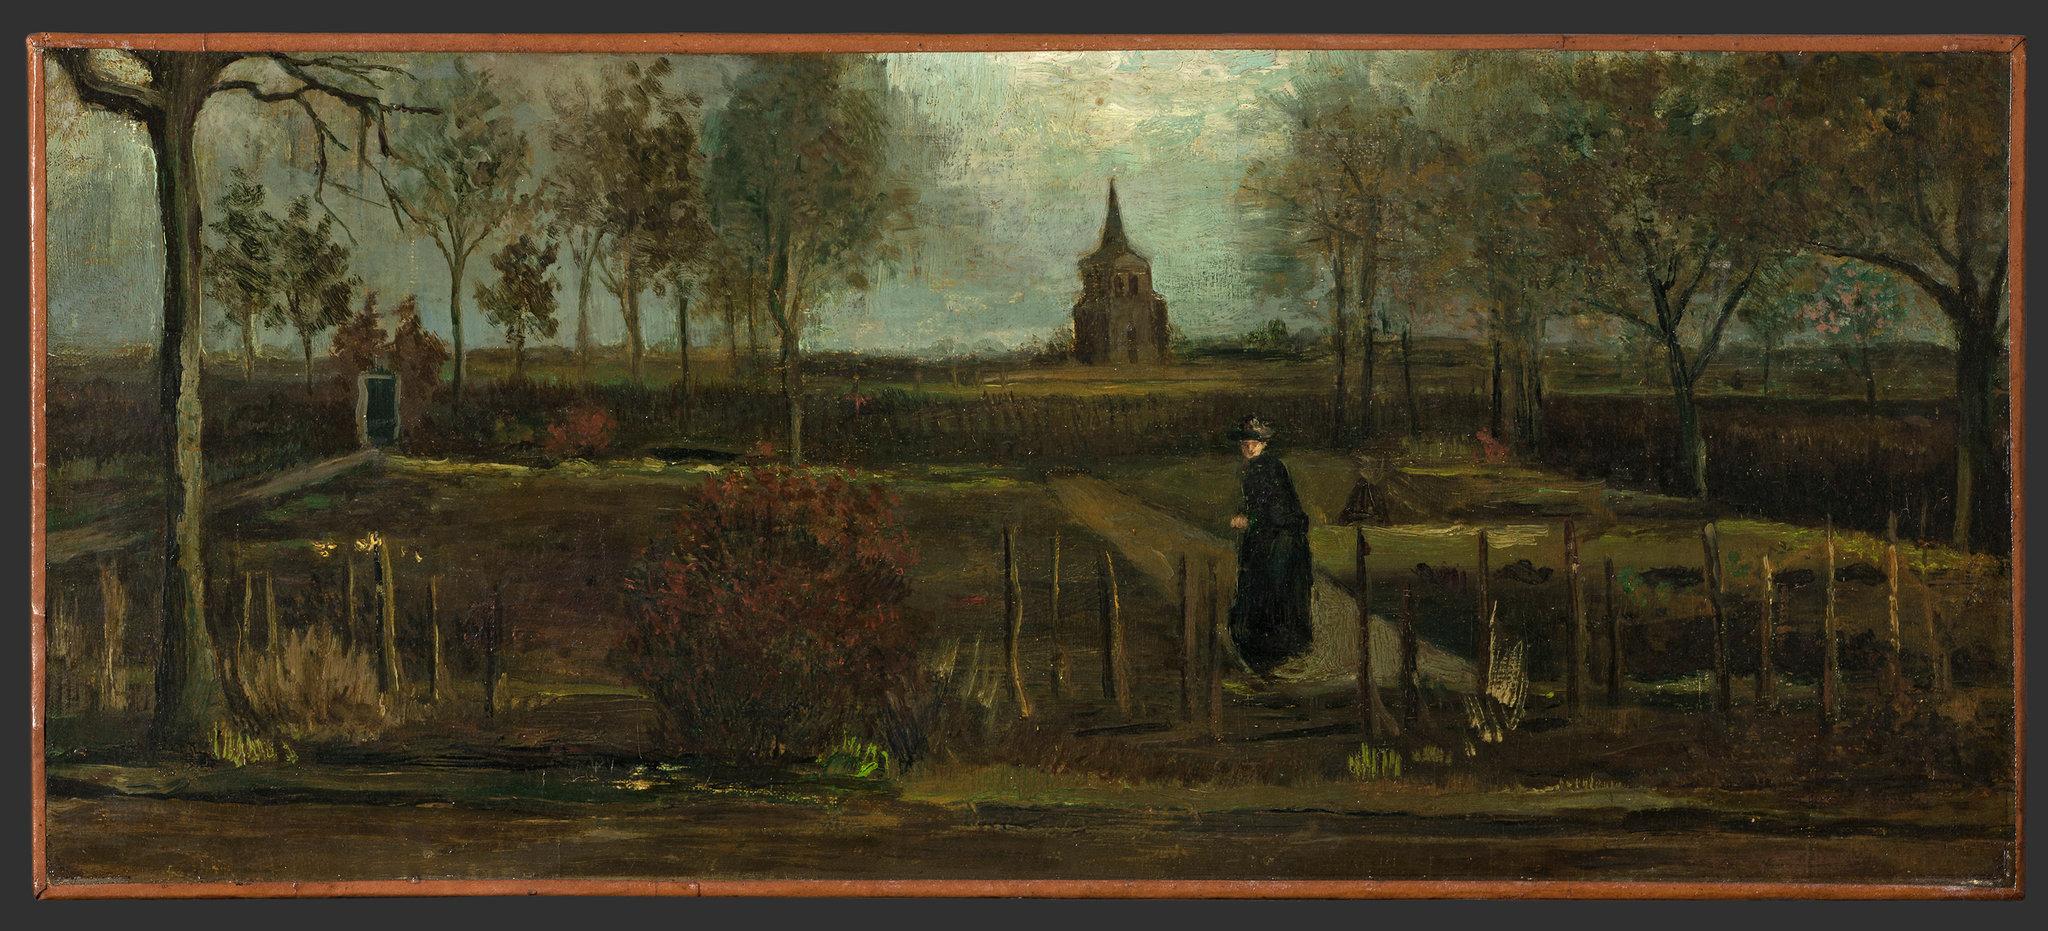 Van Gogova slika ukradena iz nizozemskog muzeja